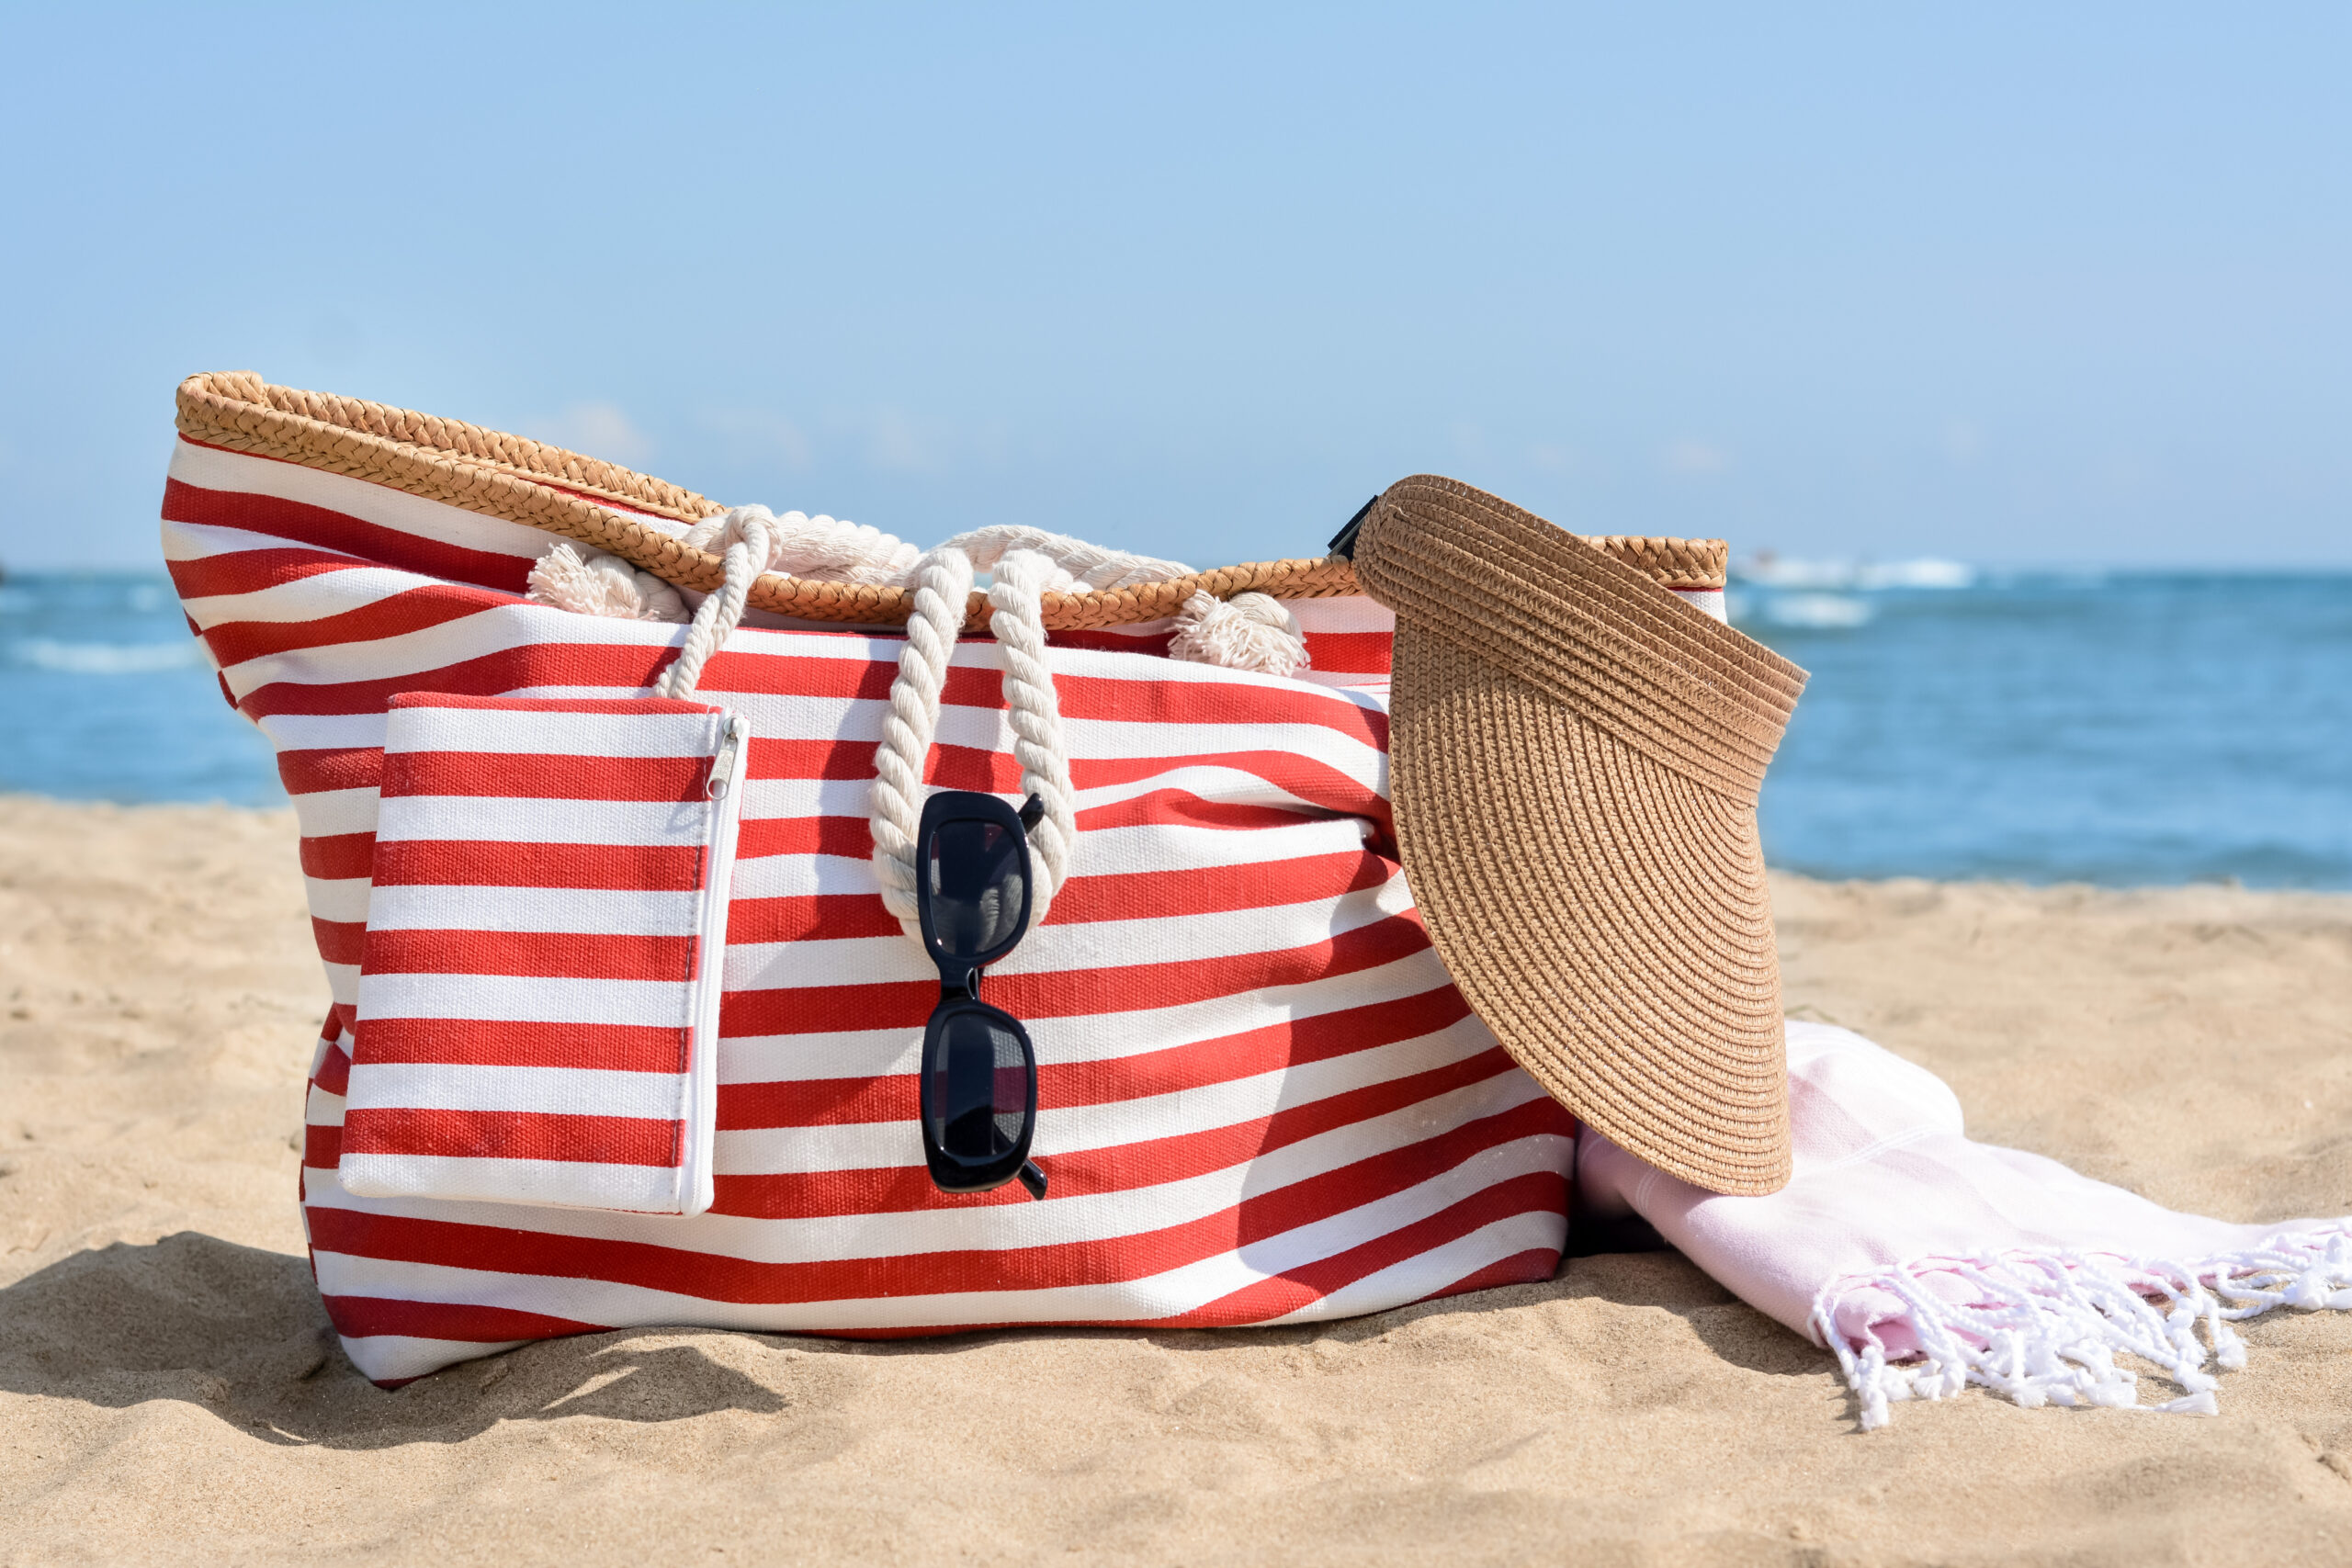 Stylish striped bag with visor cap, sunglasses and blanket on sandy beach near sea for beach side getaway.